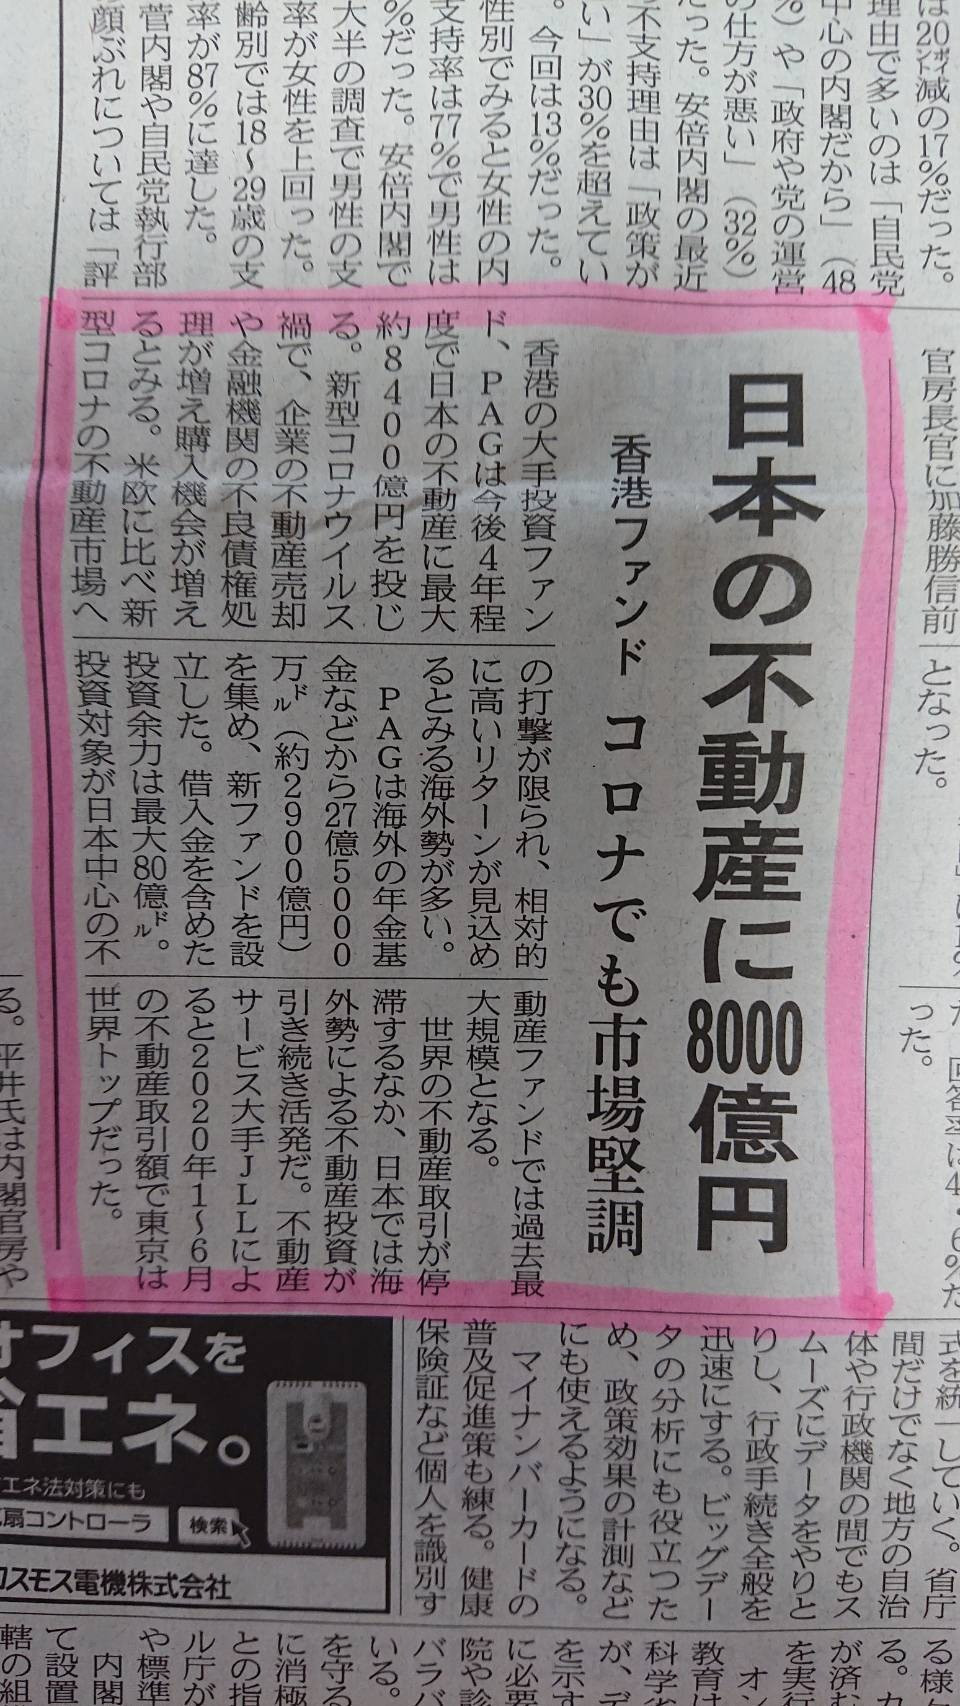 PAG　日本に8000億円を投資